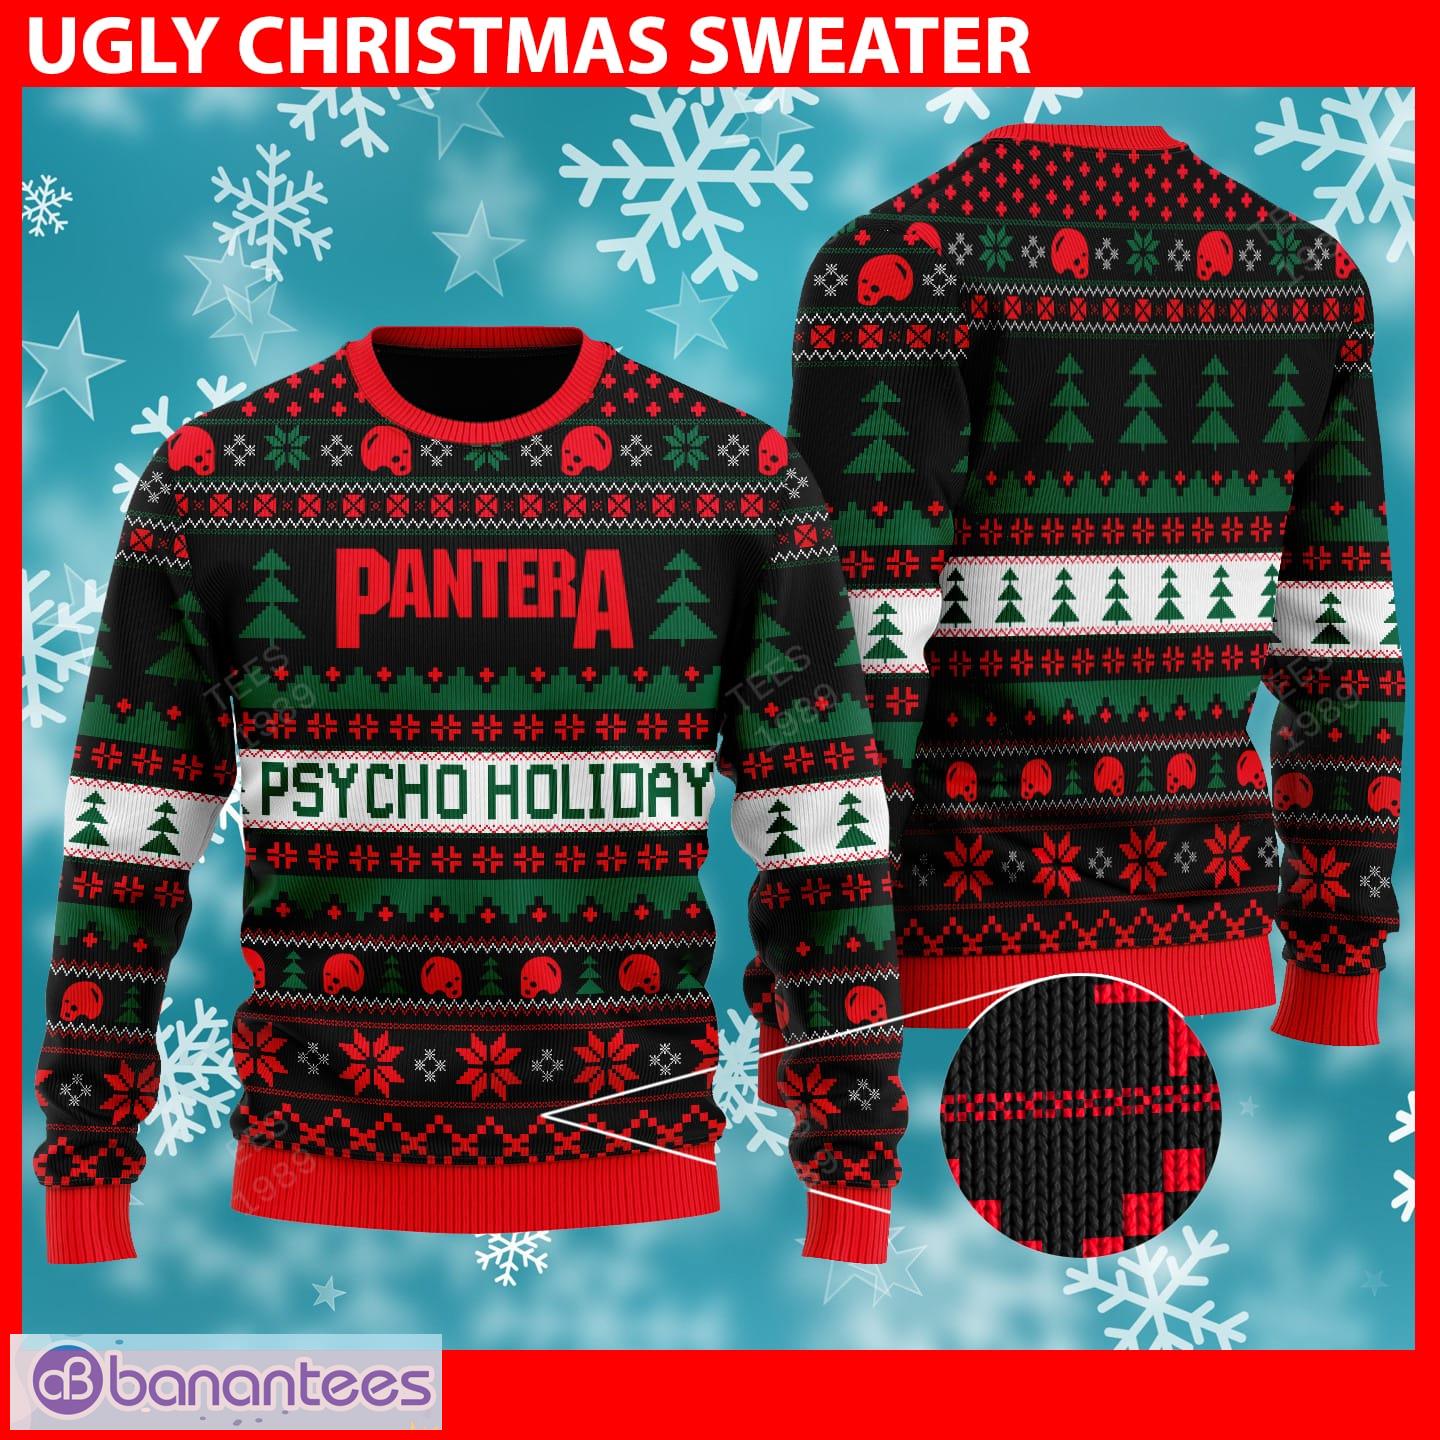 Pantera Psycho Holidays Christmas For And Banantees - Sweater Women Ugly Men 3D